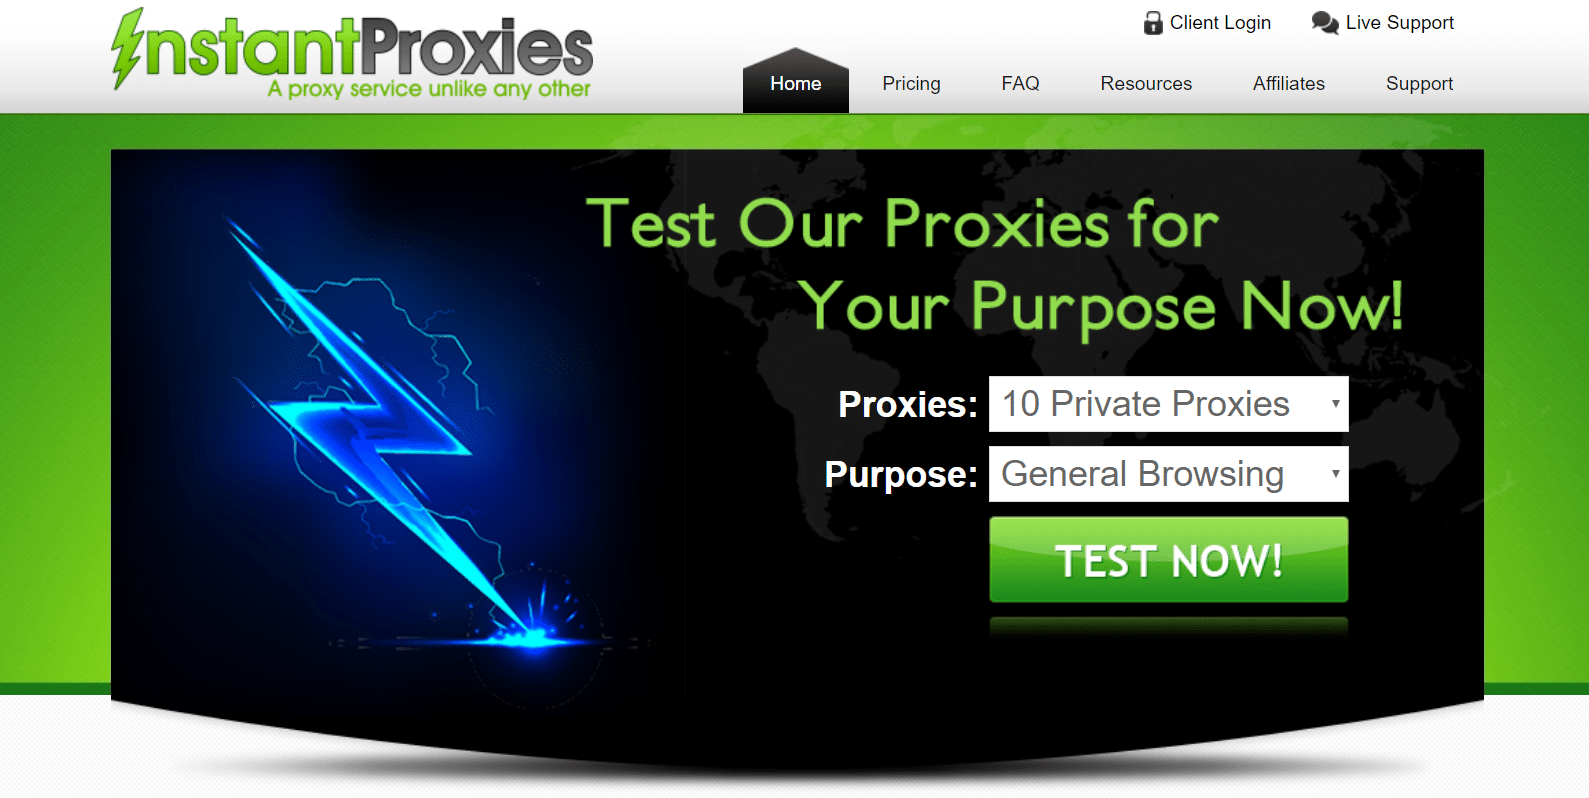 InstantProxies 网站主页